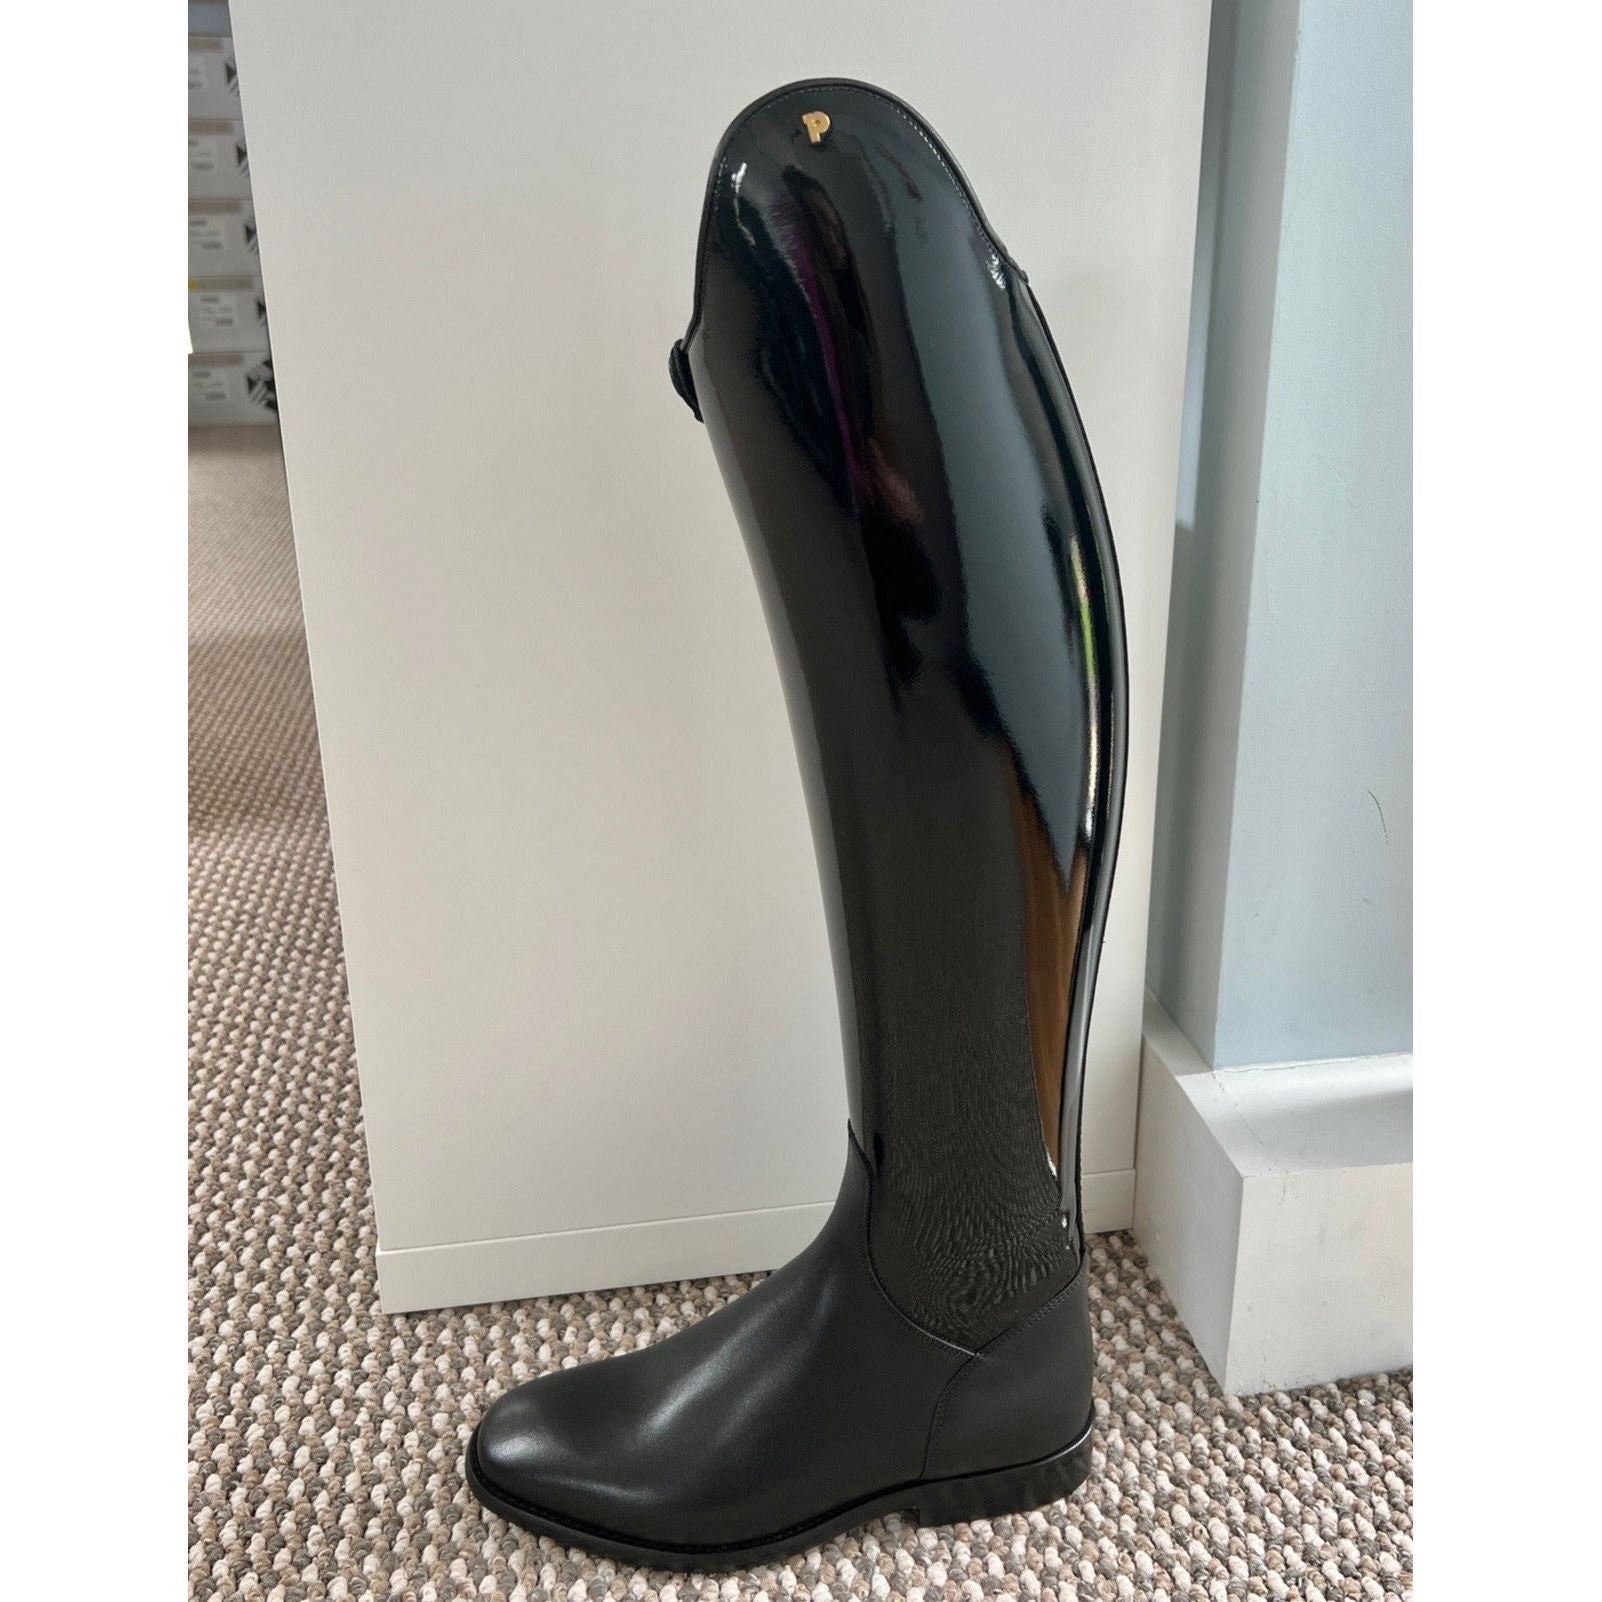 Petrie Bergamo Boots - Patent